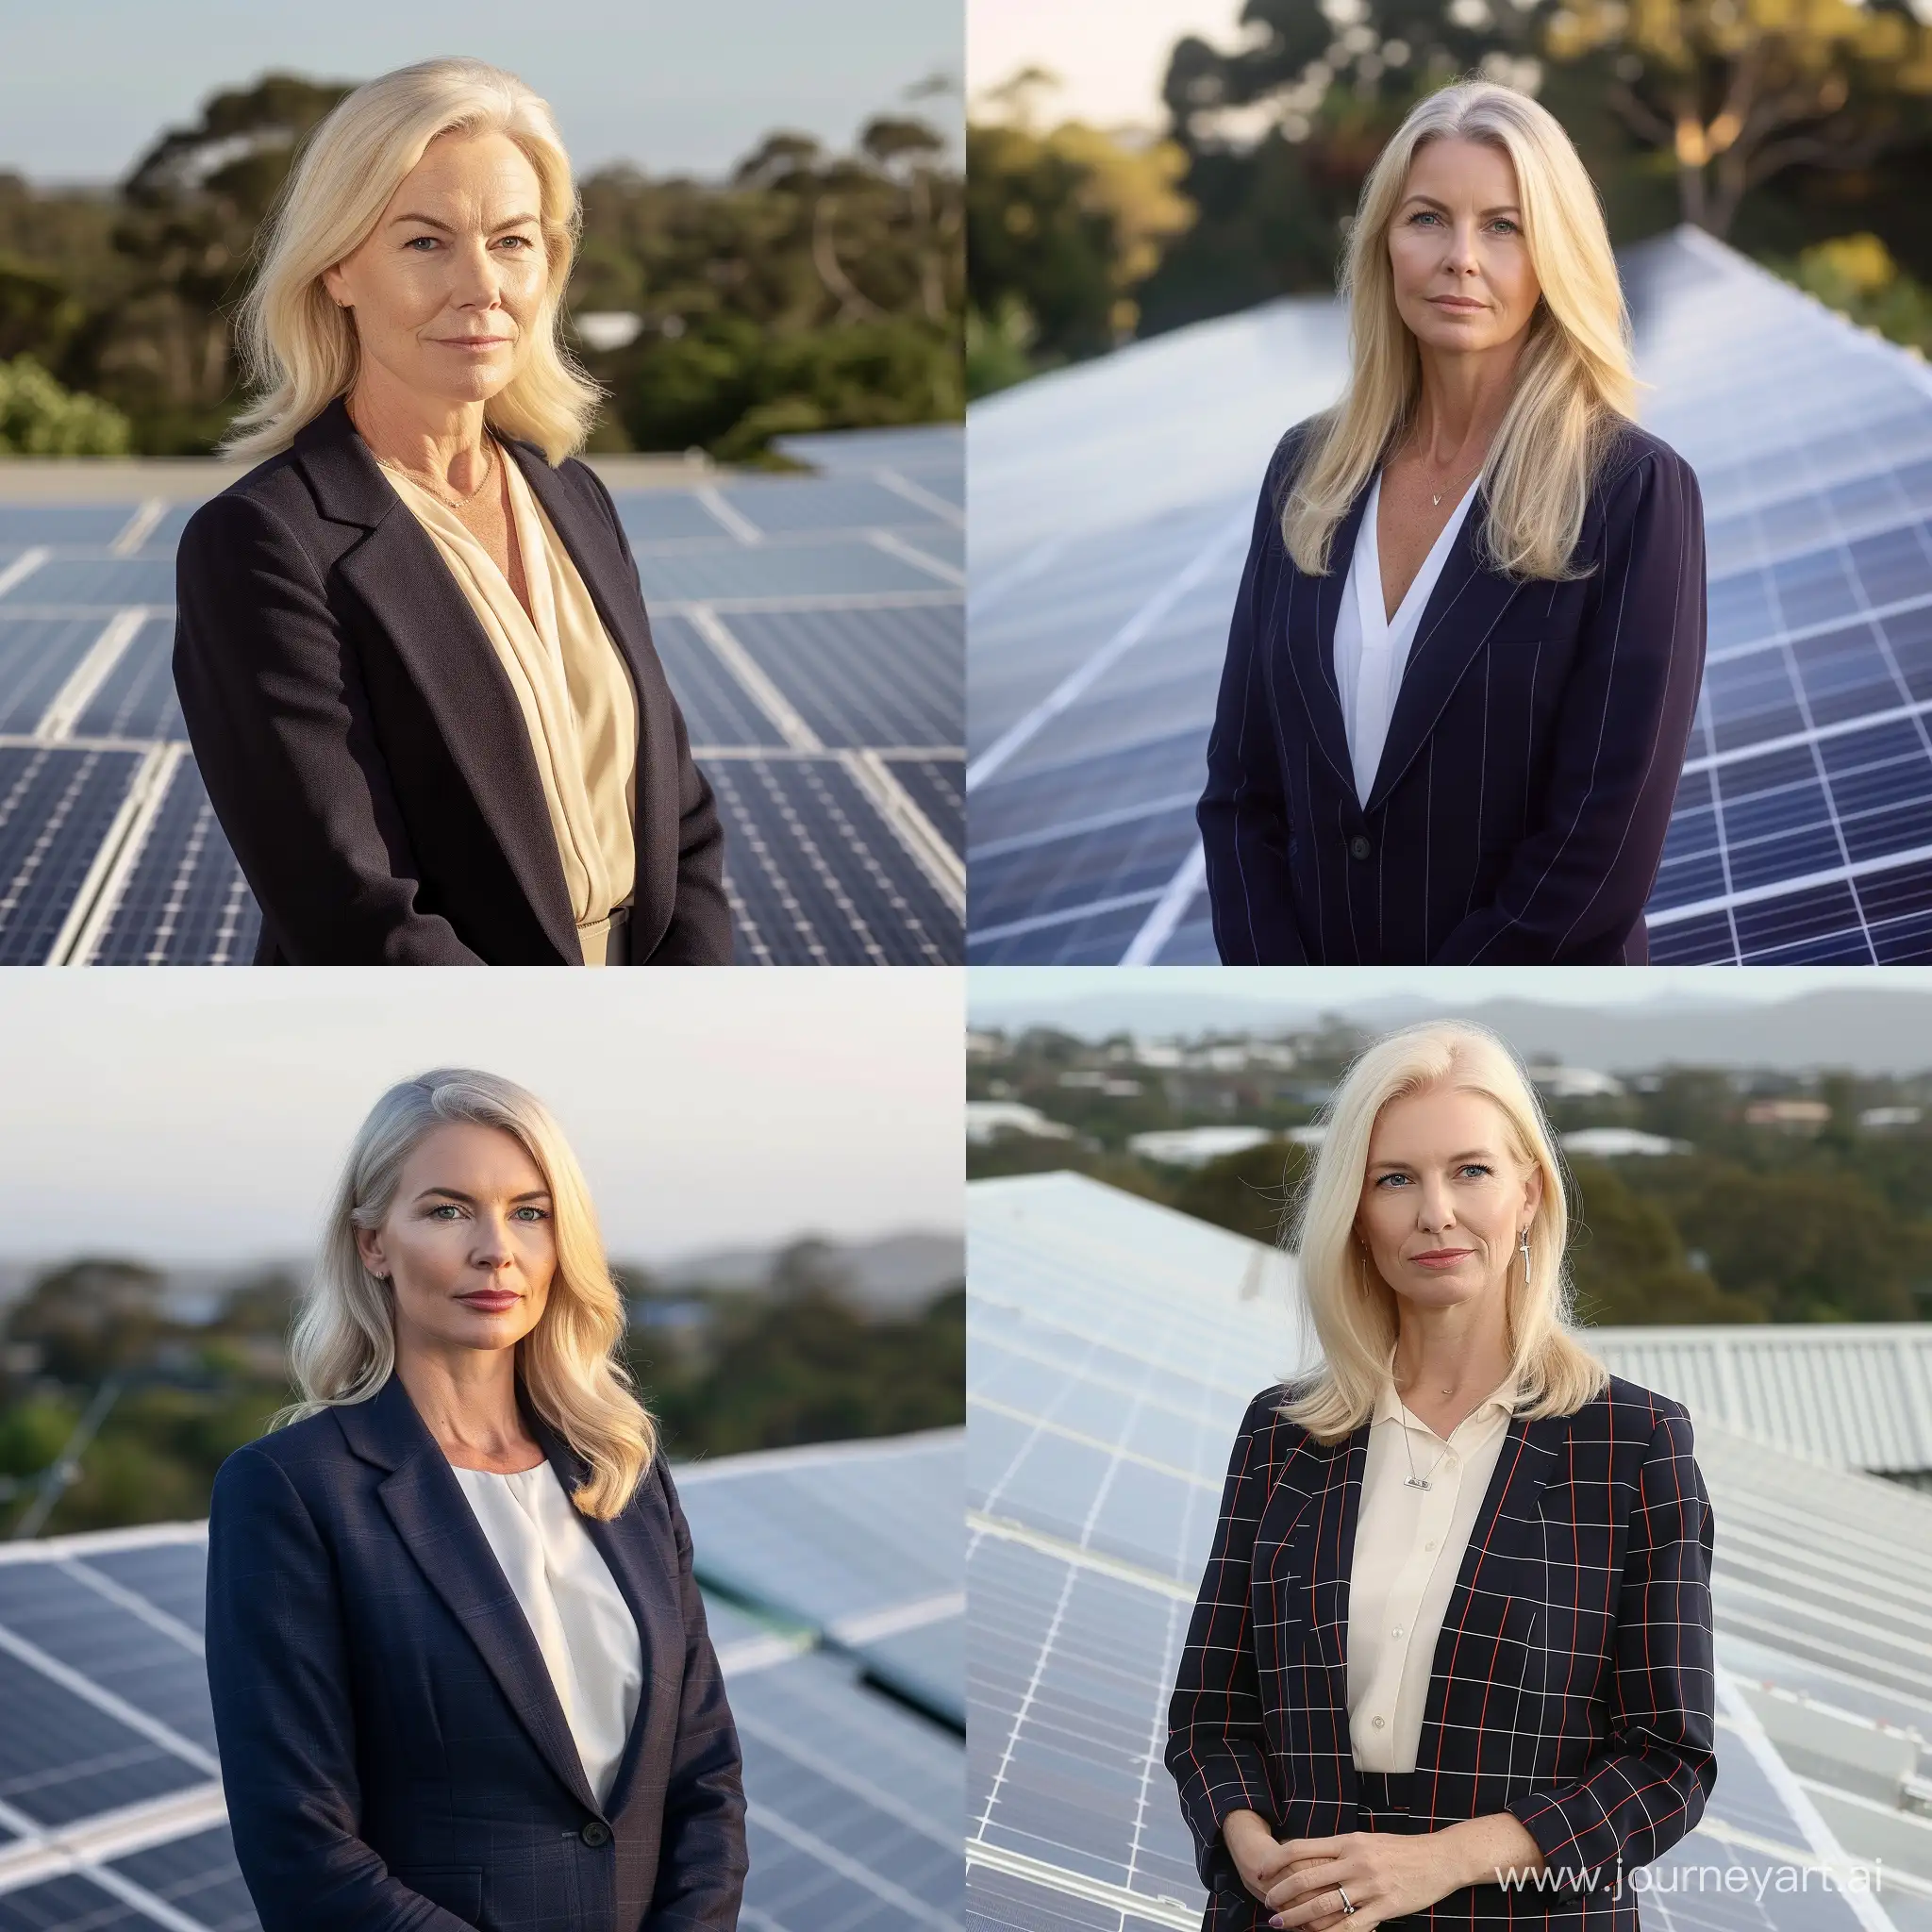 Australian-Politician-Contemplating-Renewable-Energy-Future-Amidst-Solar-Panels